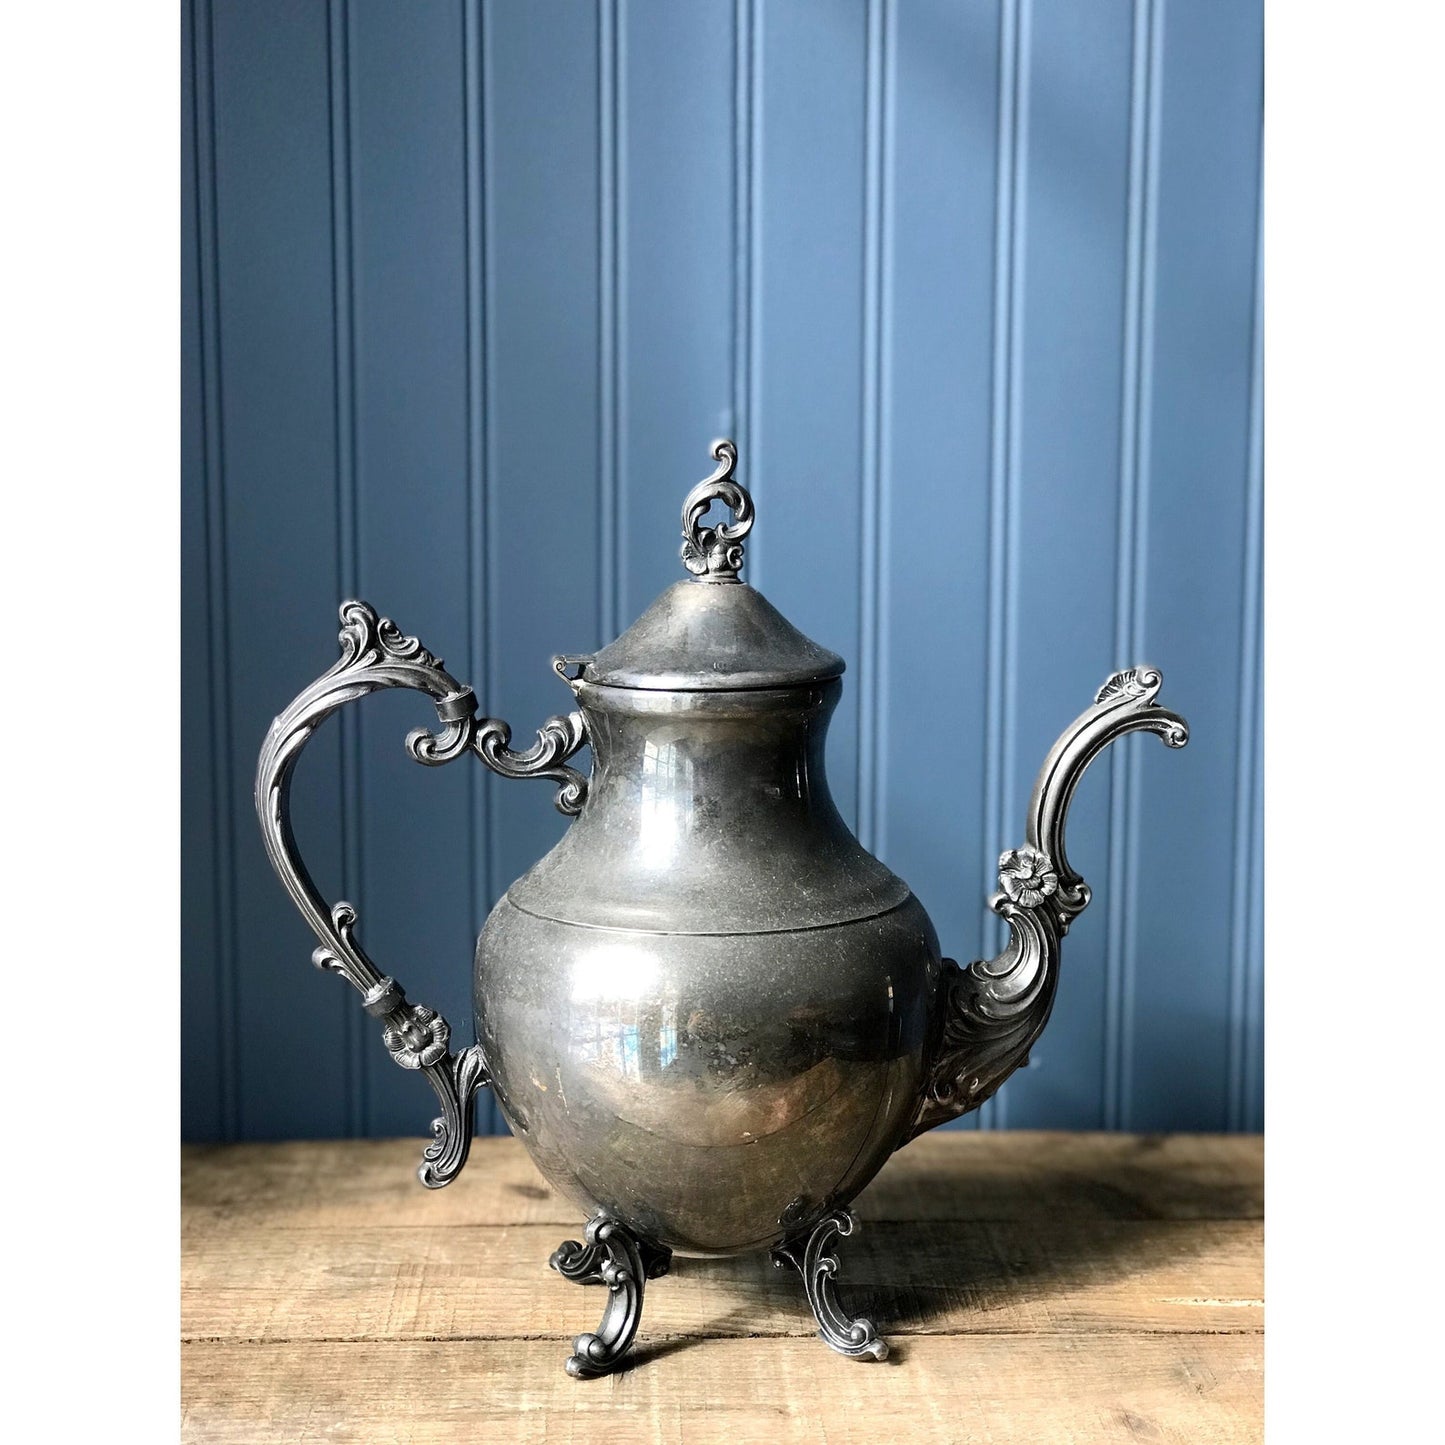 Fb Rogers silver teapot